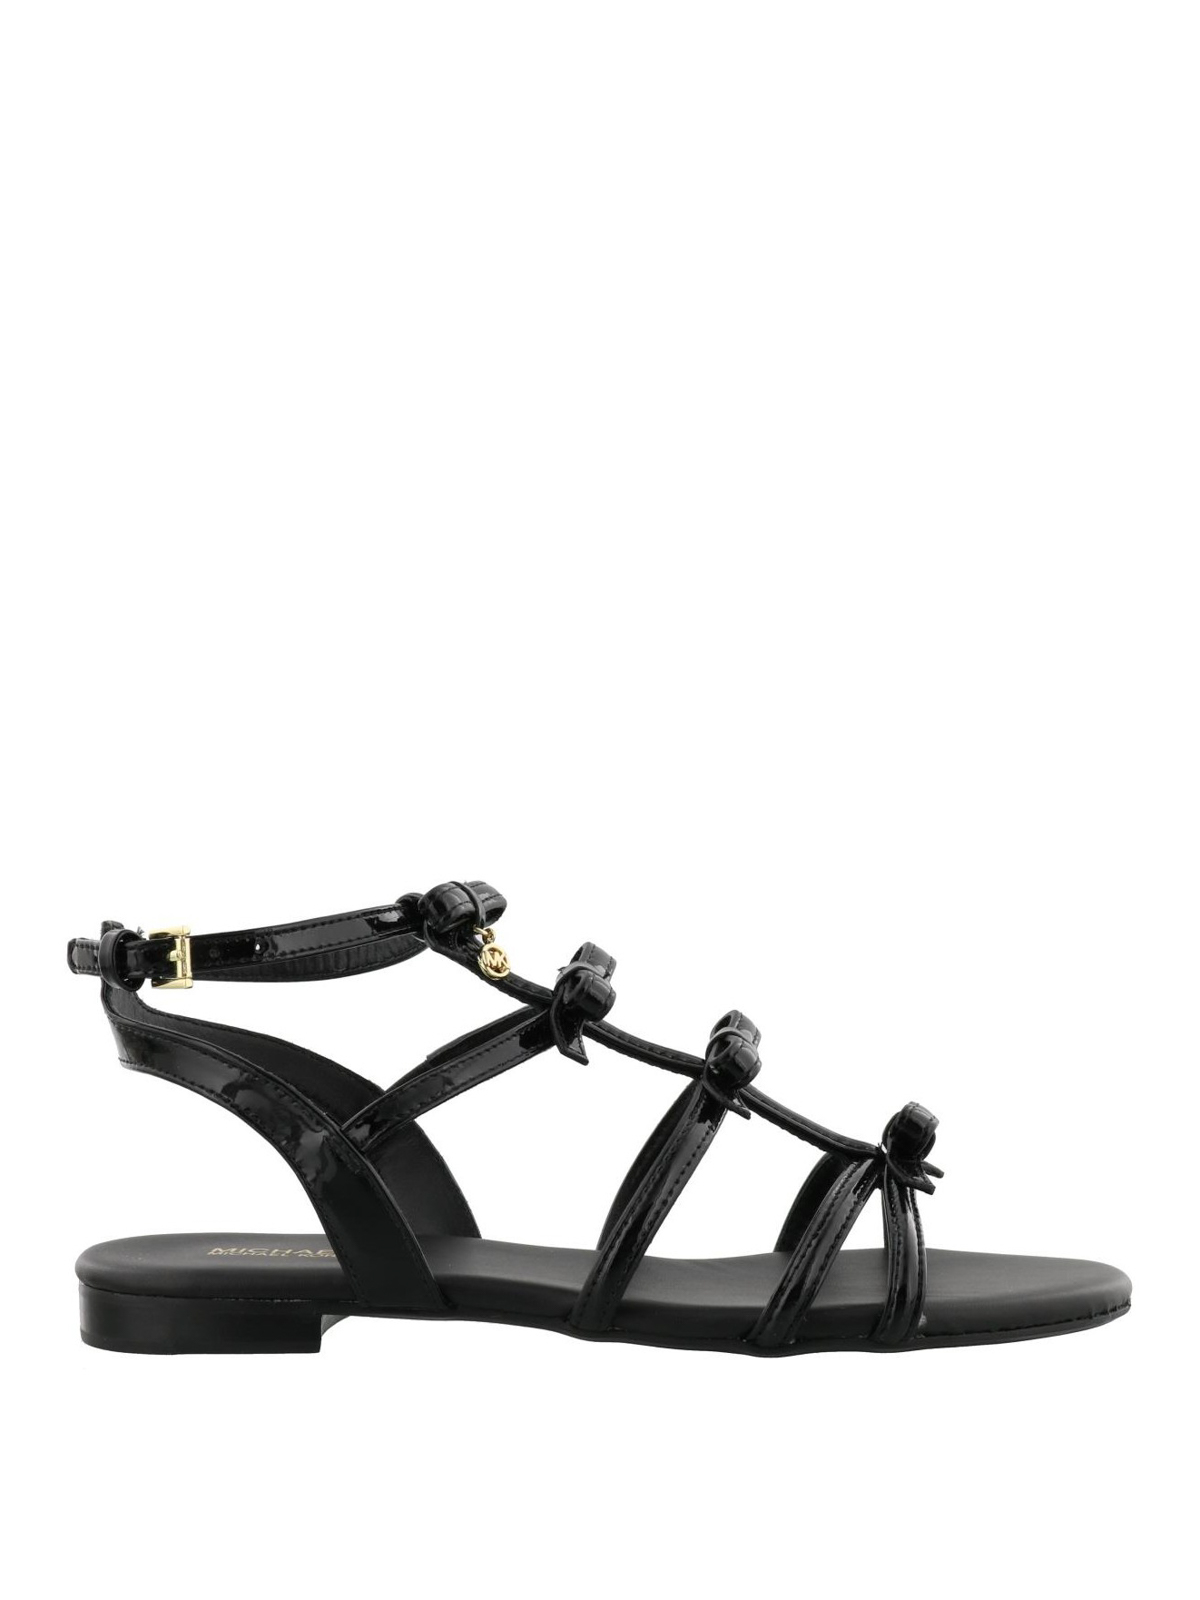 Sandals Michael Kors - Veronica multi bow flat sandals - 40S8VRFA1A001